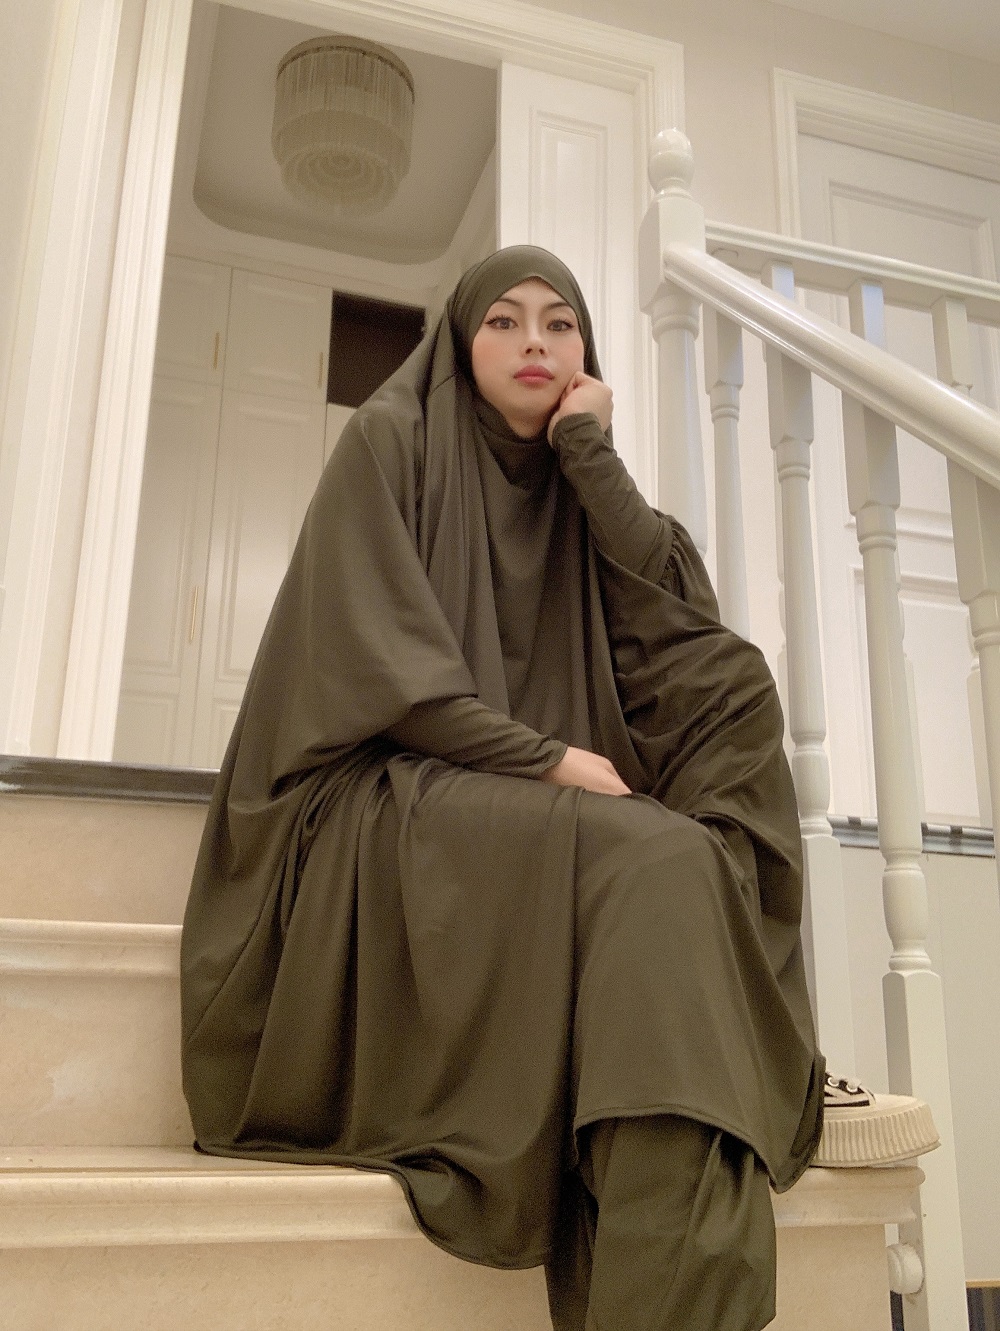 Hooded Muslim Women Hijab dress Prayer Jilbab Abaya Long Khimar Full Cover 2pcs set Islamic Clothes